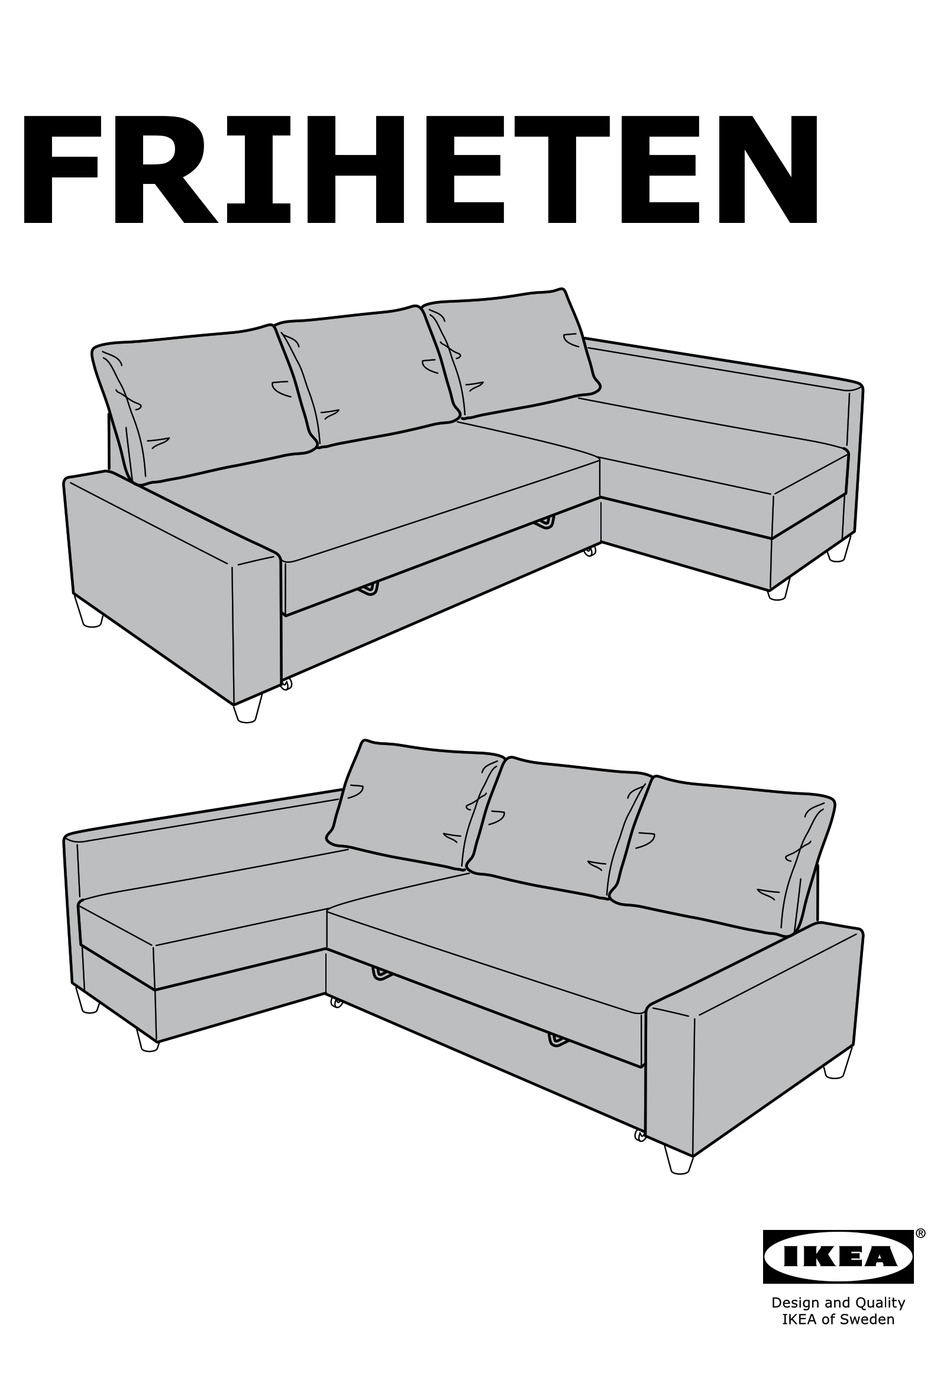 Ikea Friheten Assembly Instructions, Friheten Three Seat Sofa Bed Assembly Instructions